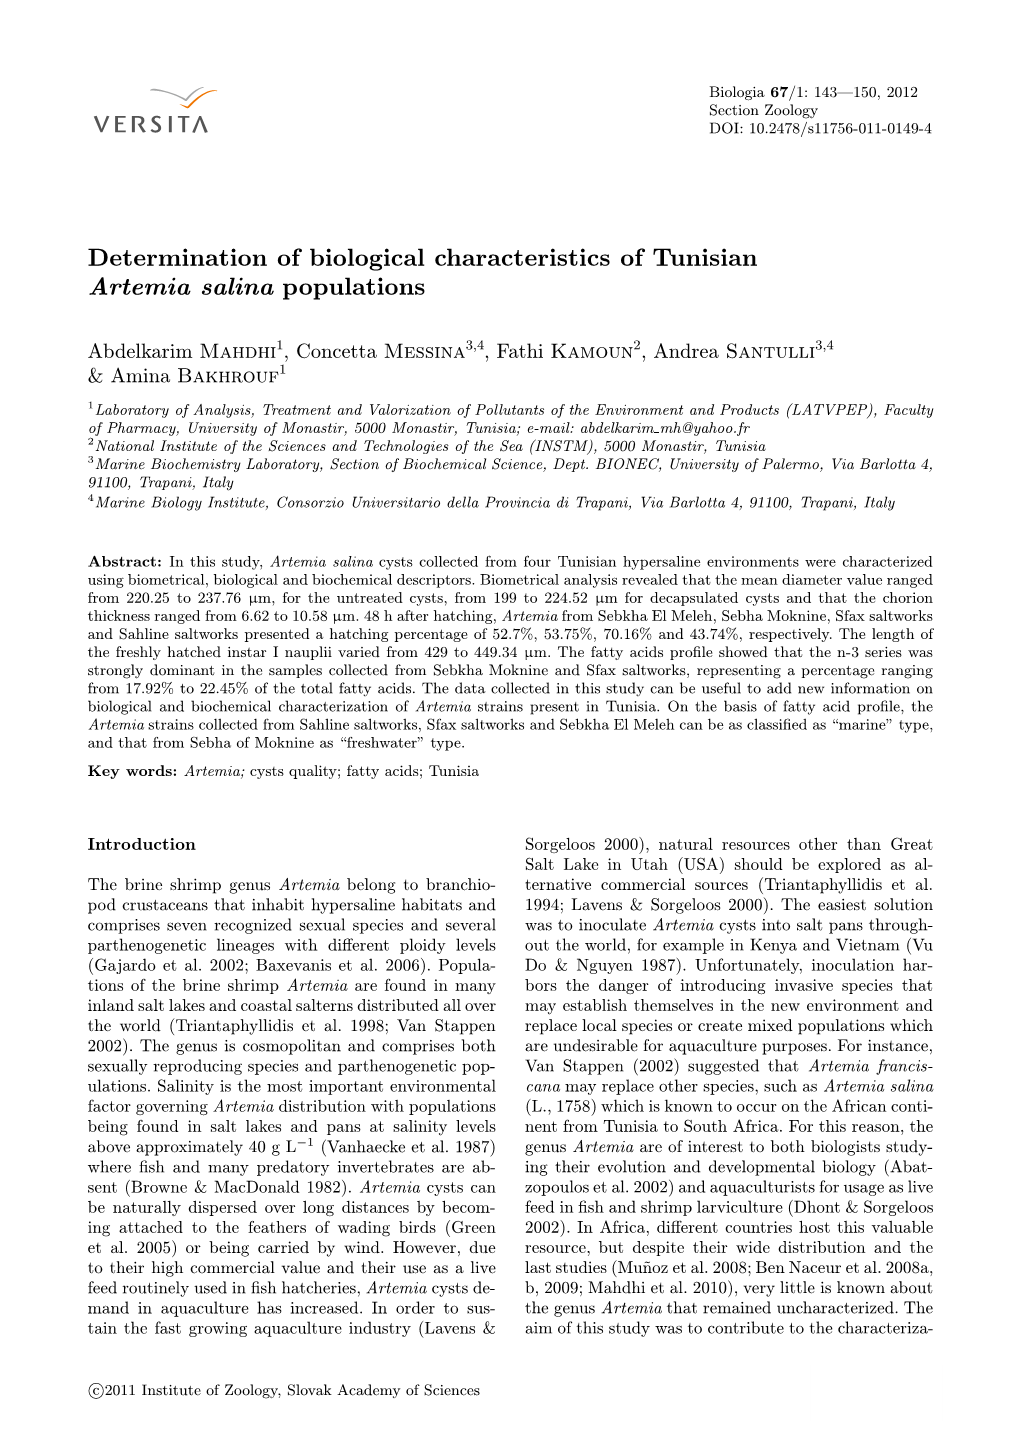 Determination of Biological Characteristics of Tunisian Artemia Salina Populations